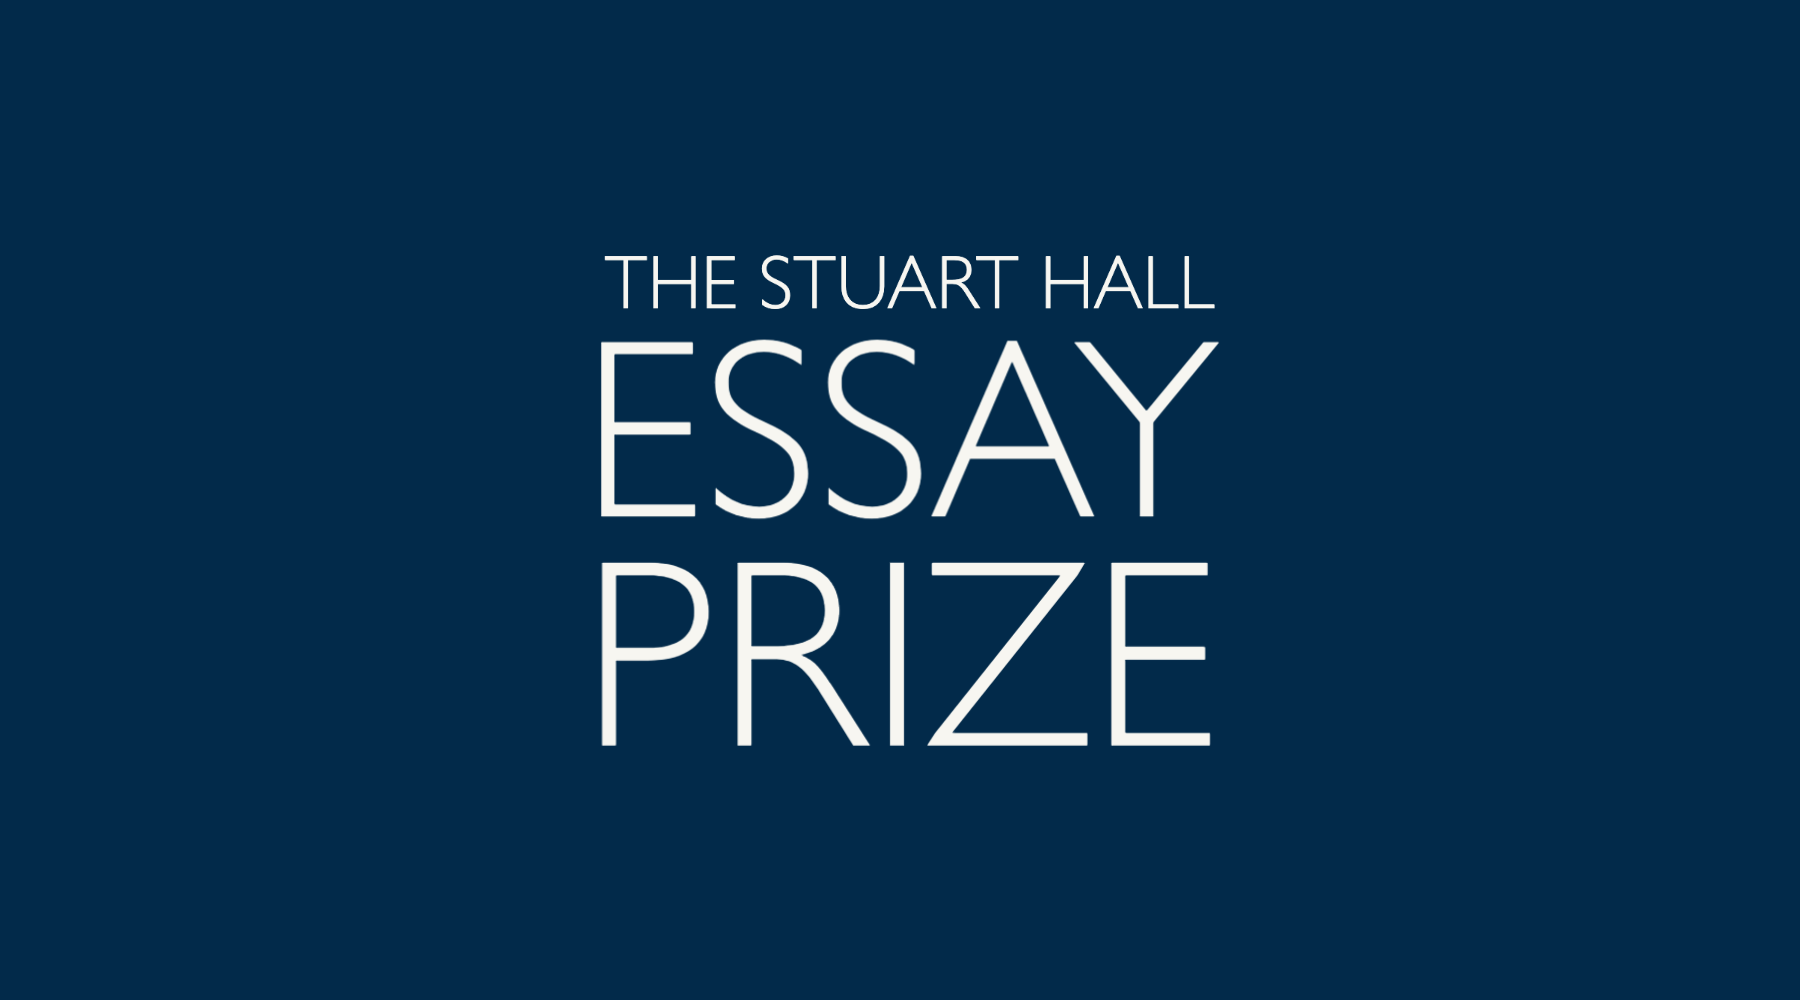 stuart hall essay prize